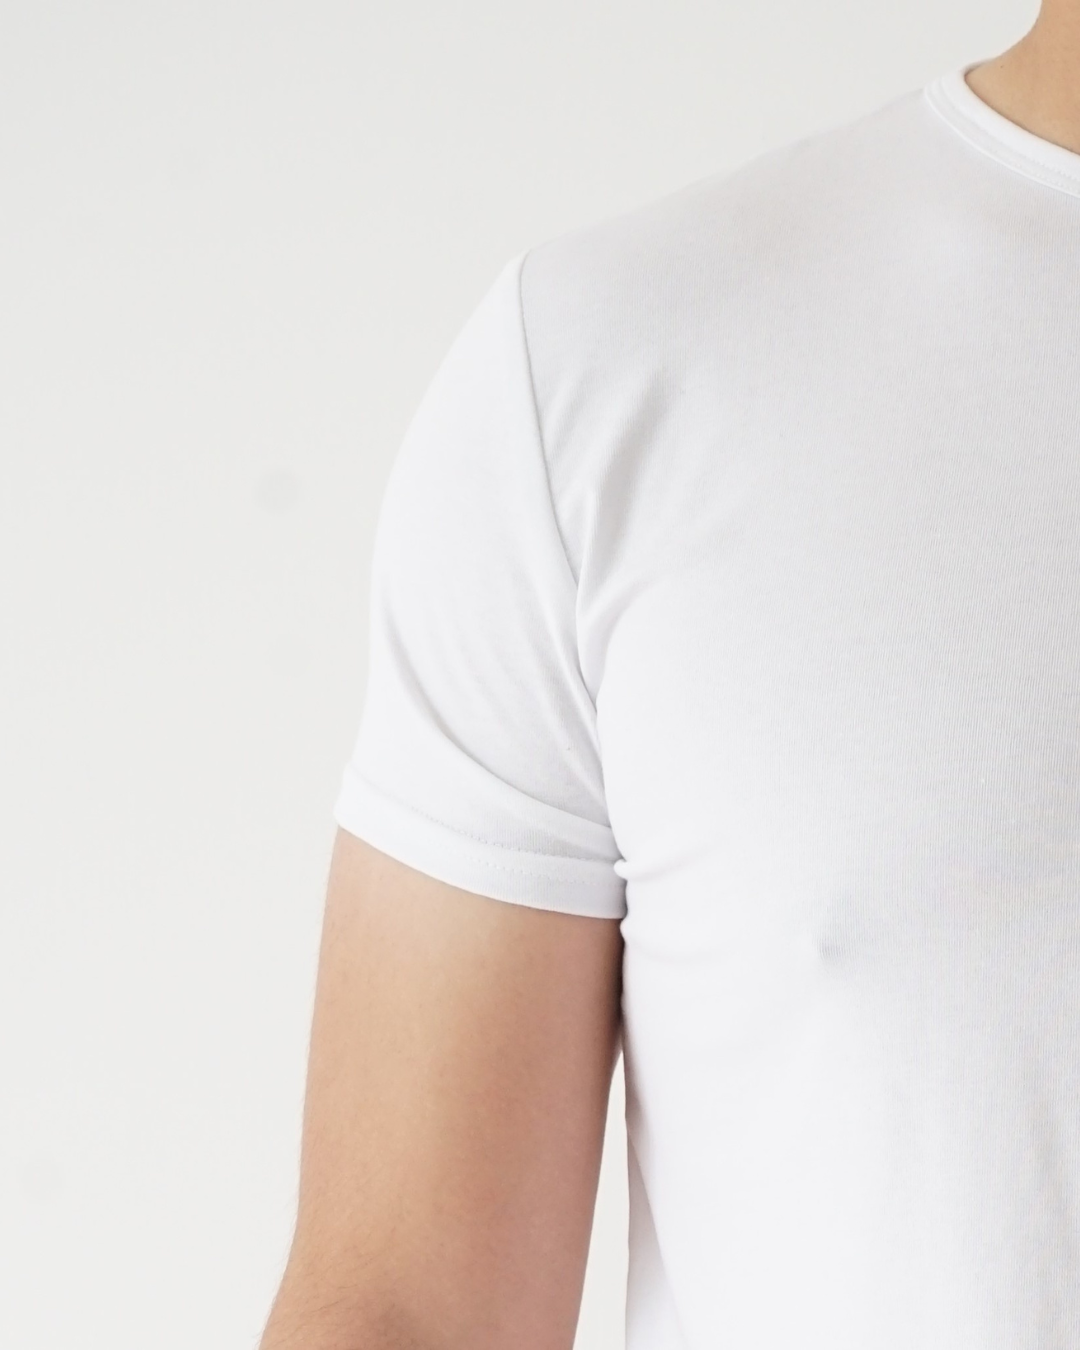 White T-shirt - Short Sleeve Crew Neck Original Bottom